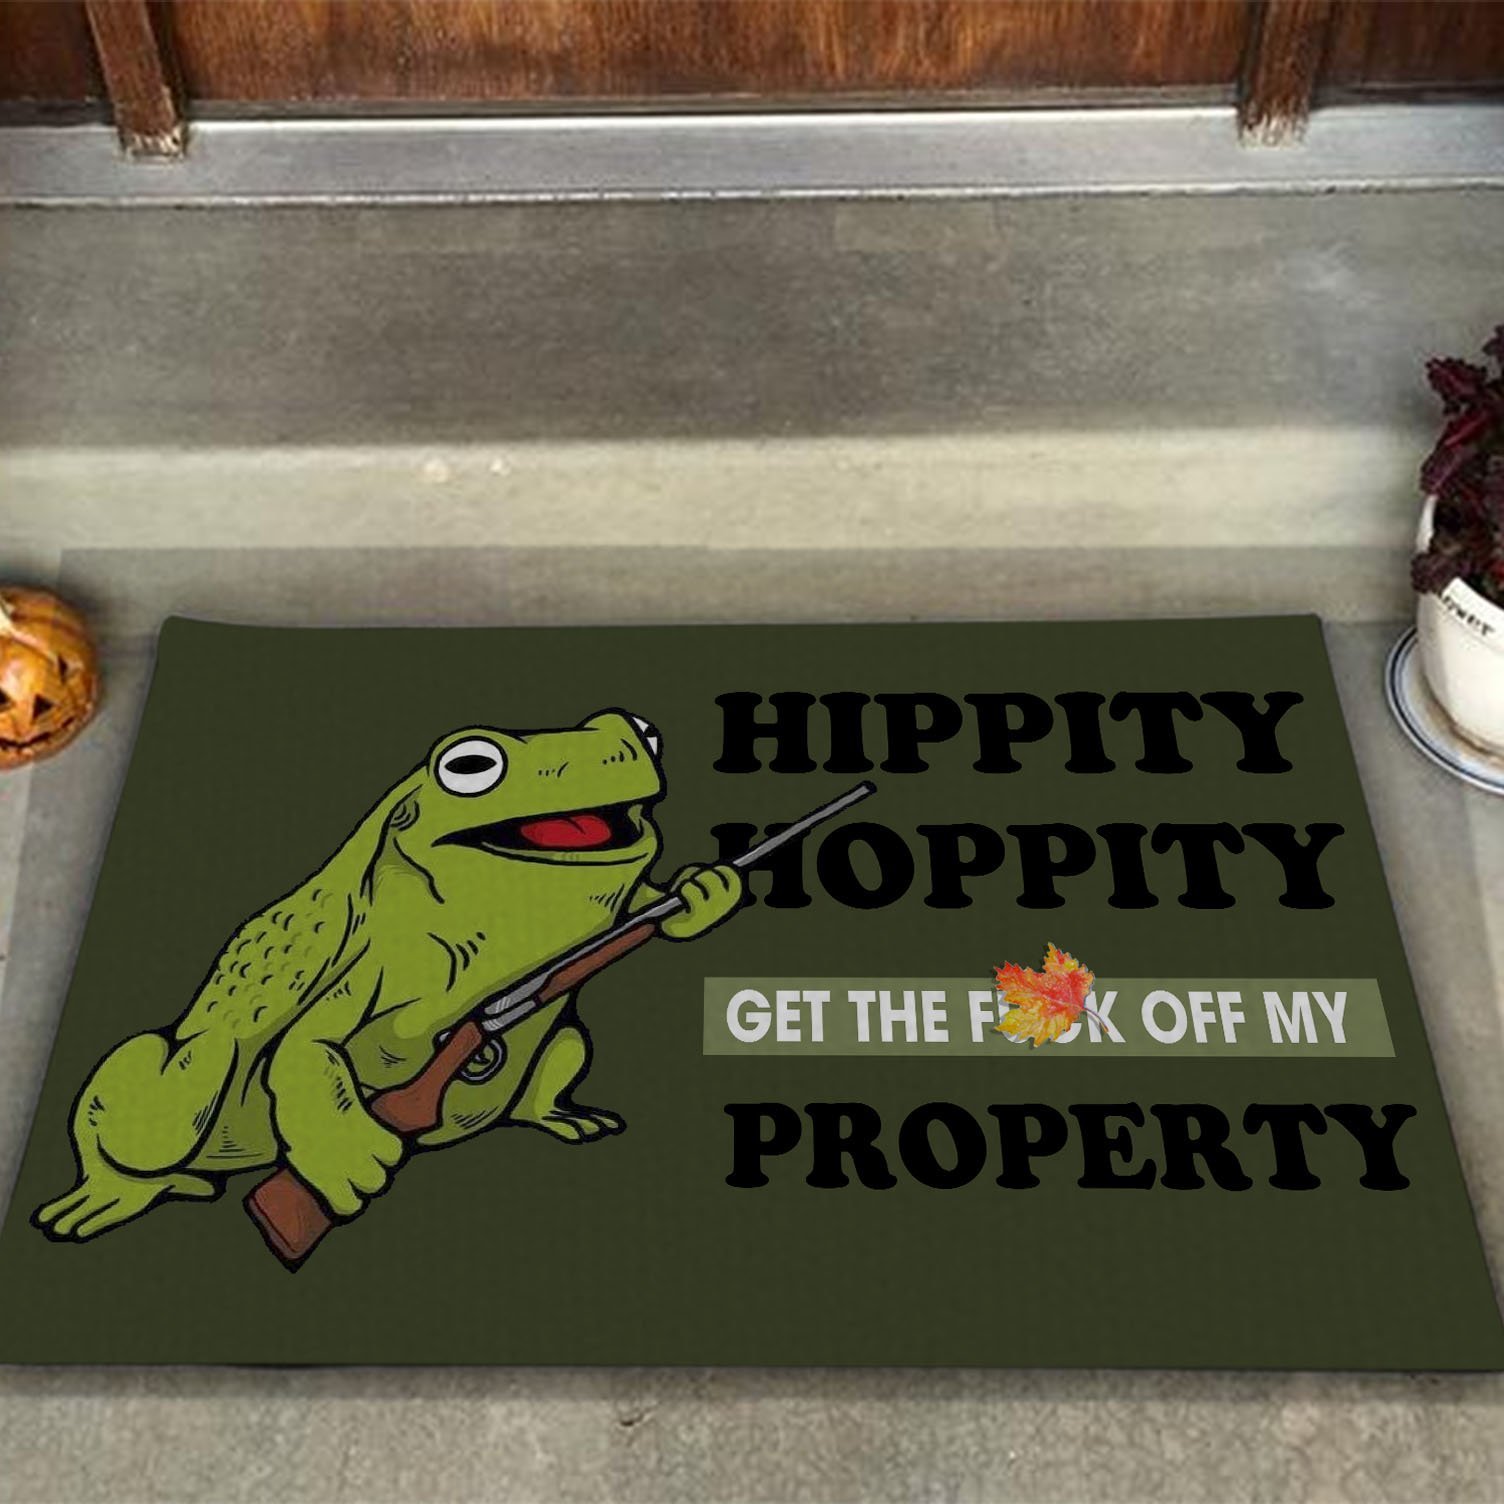 Hippity hoppity get the fuck off my property doormat